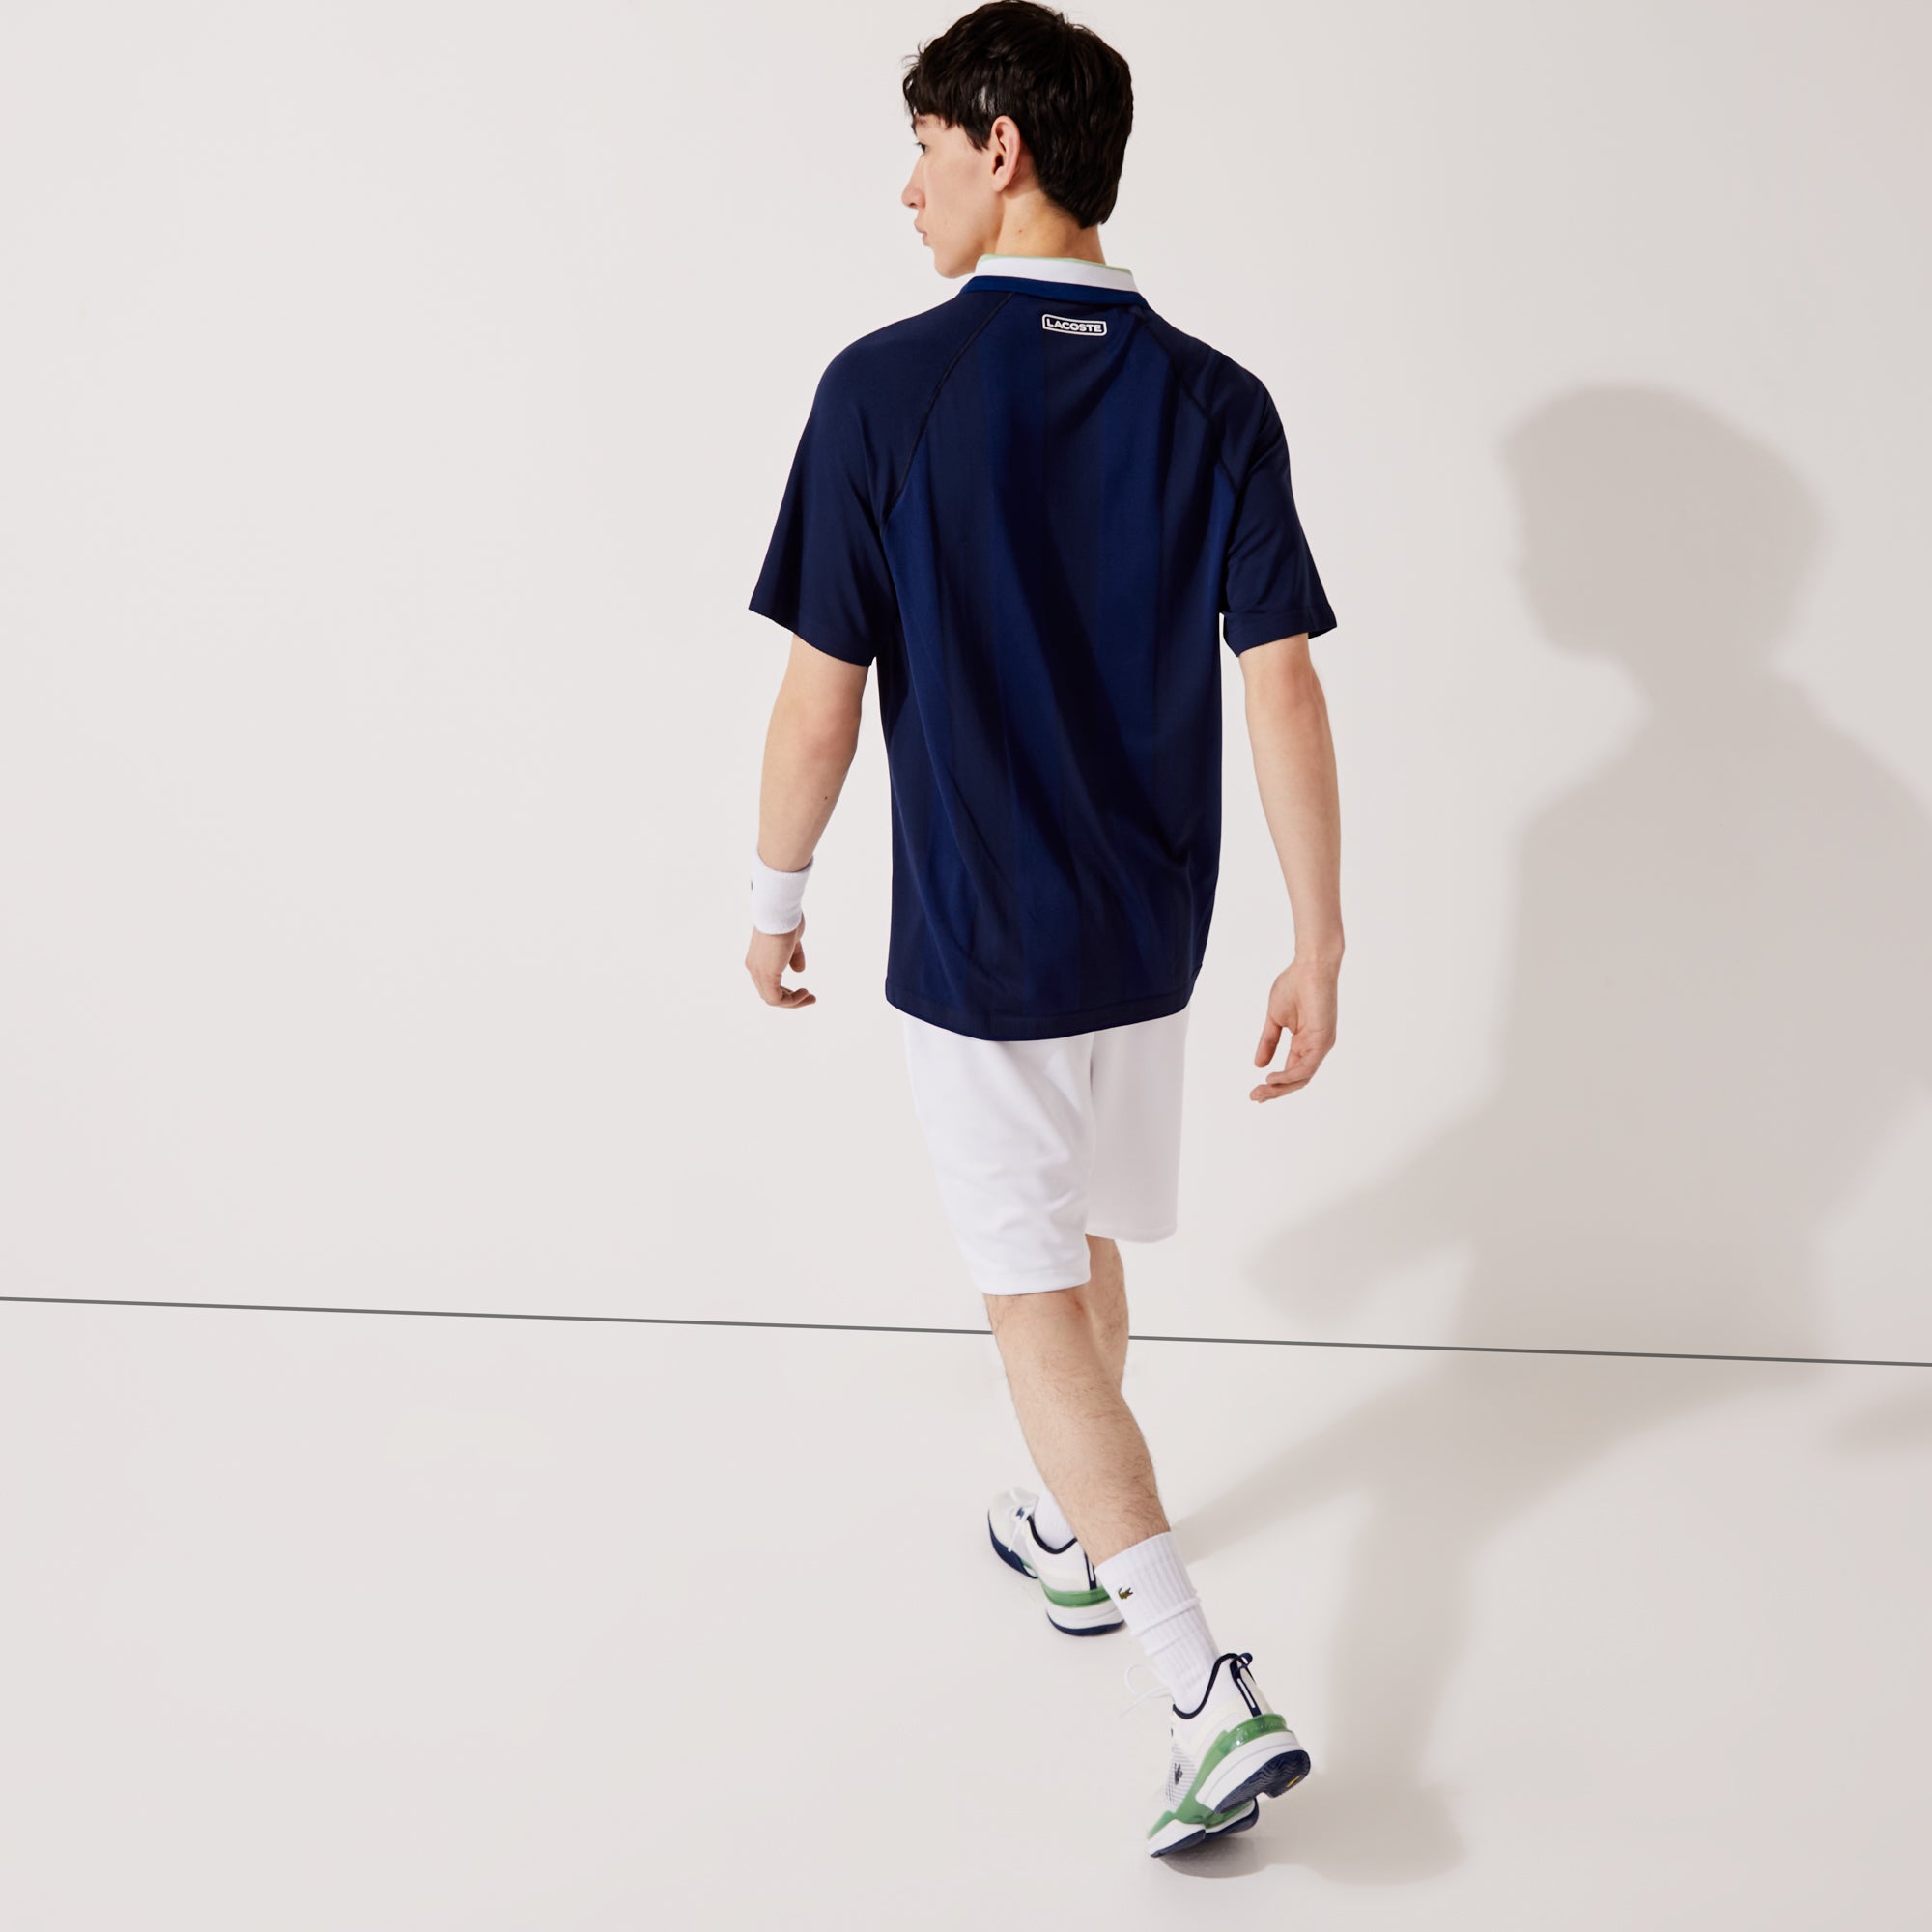 Lacoste Men's Jacquard Tennis Polo Blue (2)